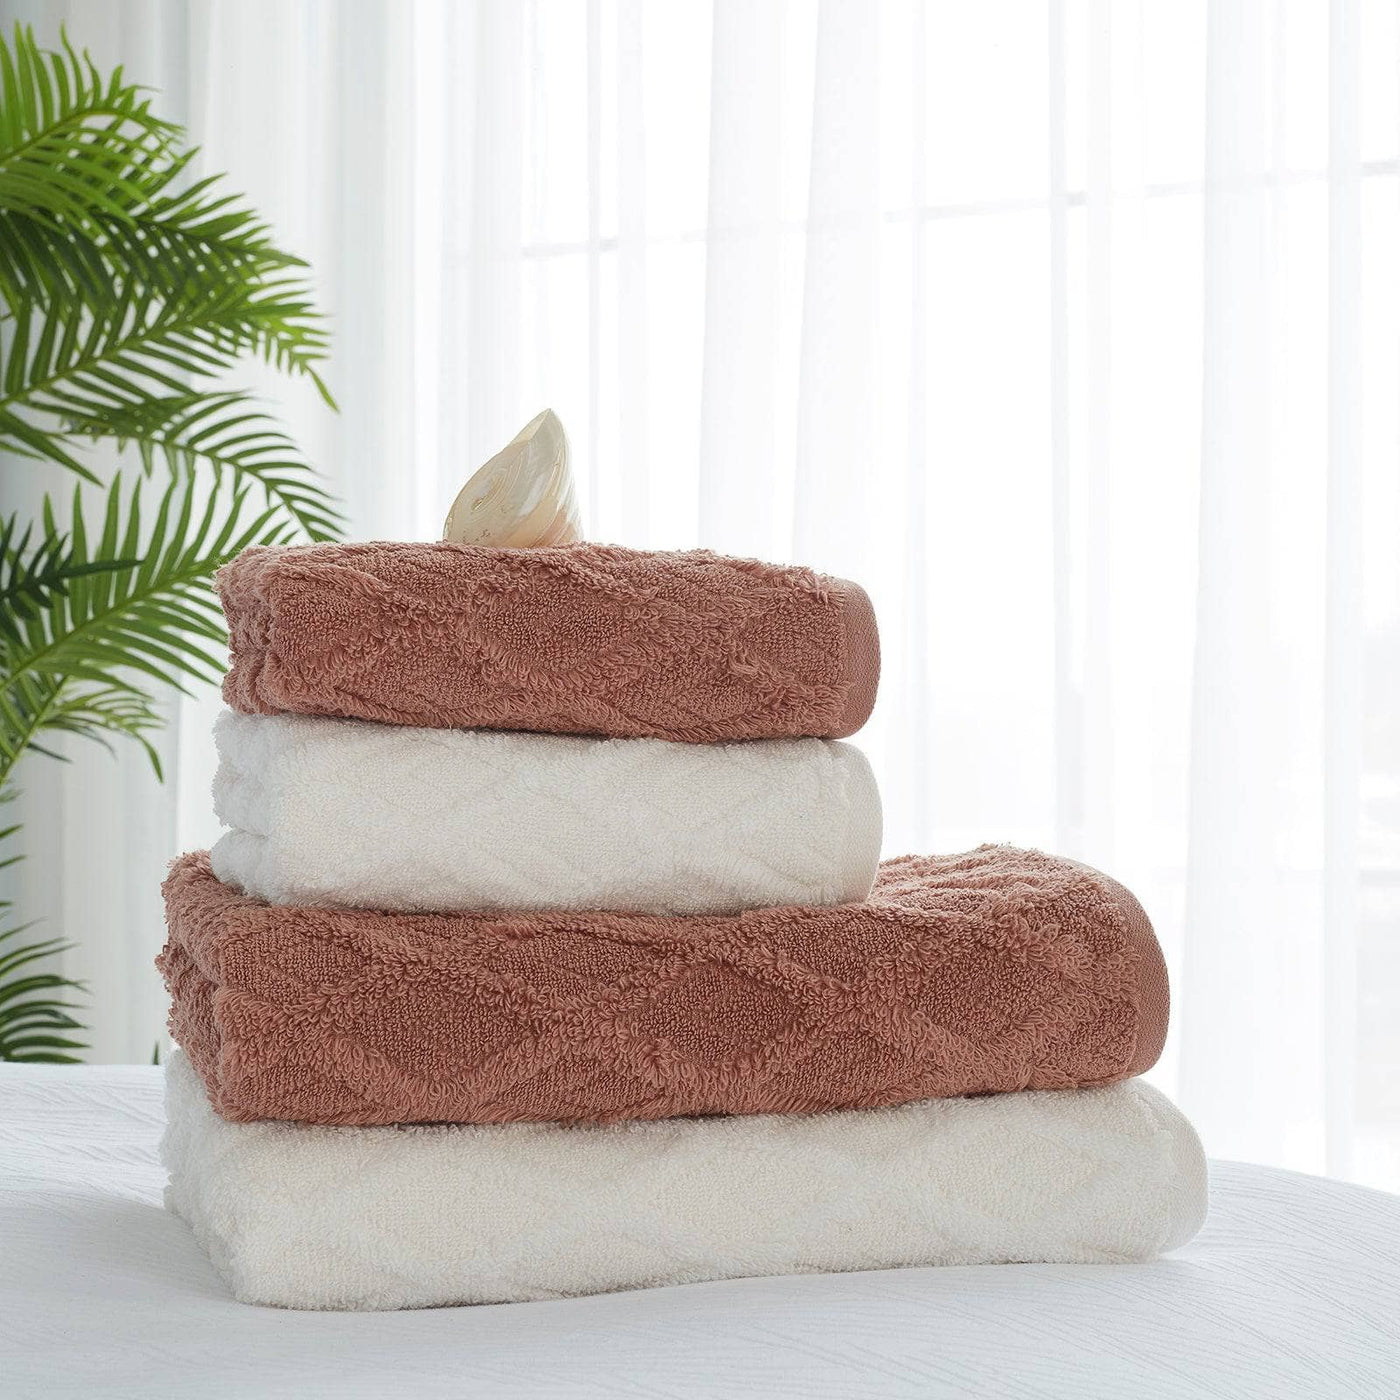 Judith Diamond Set of 2 Textured 100% Turkish Cotton Hand Towels, Off-White Hand Towels sazy.com